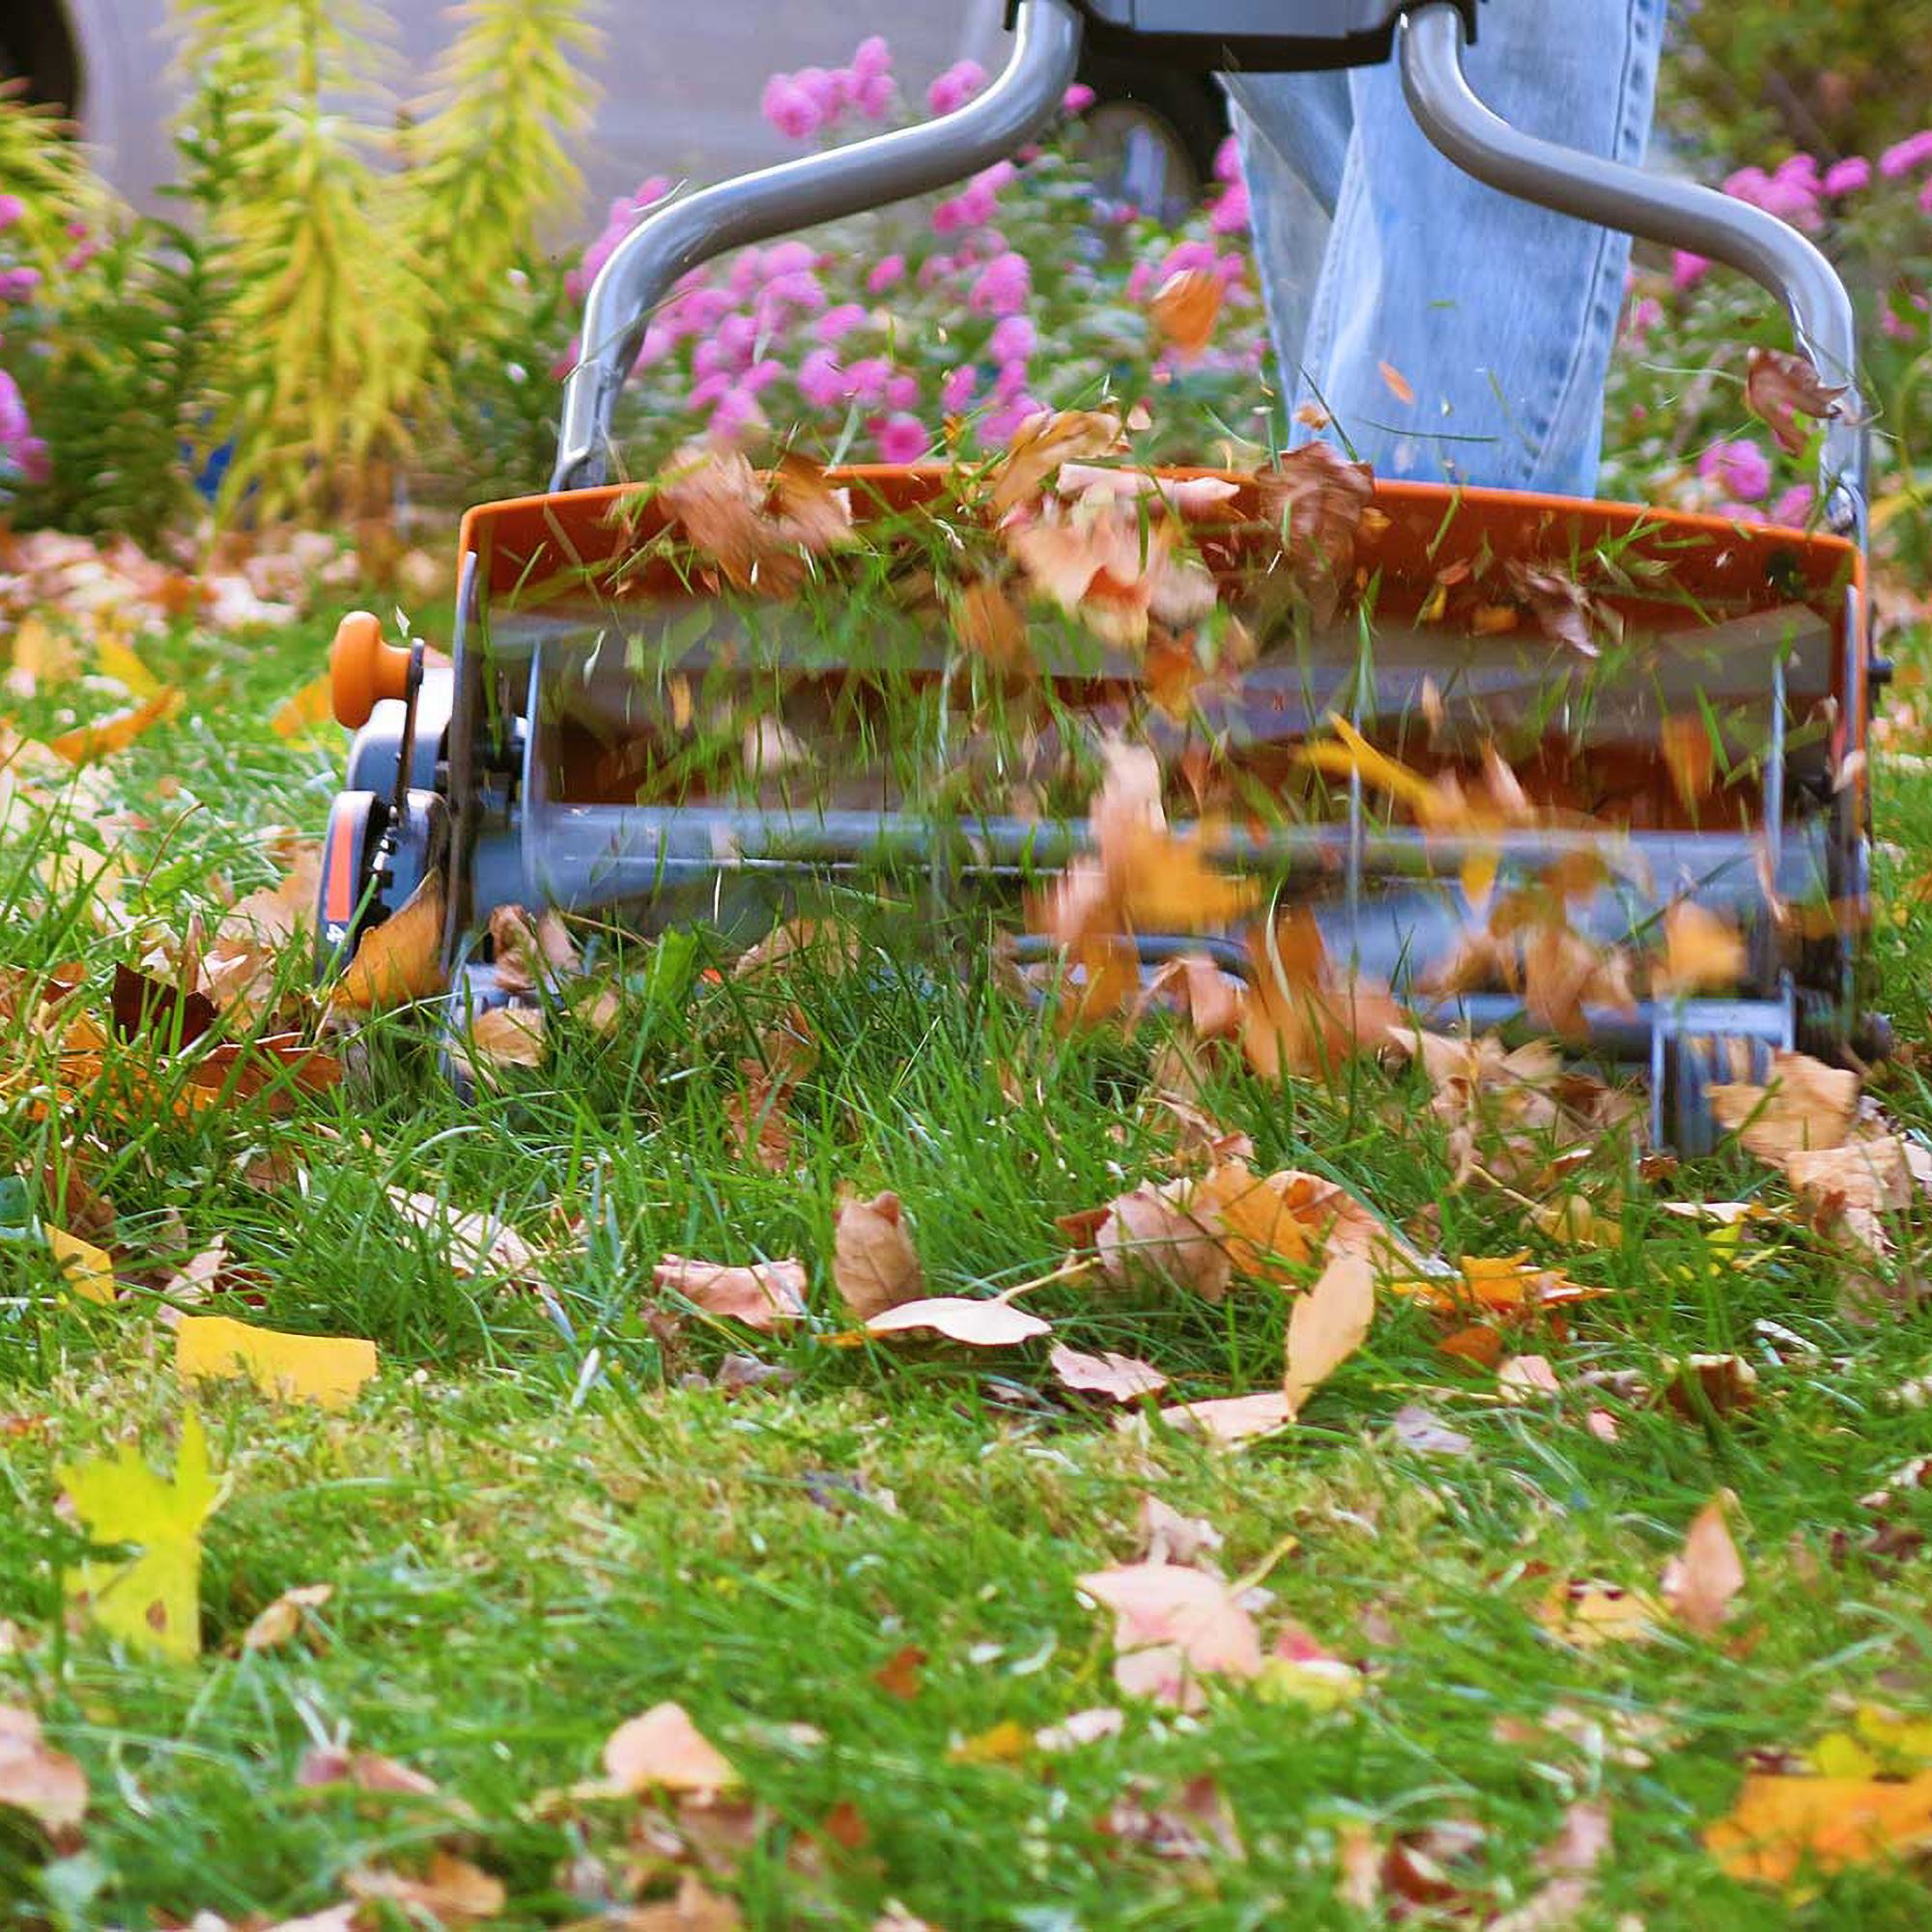 https://www.fiskars.com/-/media/fiskars/images/articles/gardening-and-yard-care/lawn-care/reel-mower-guide.jpg